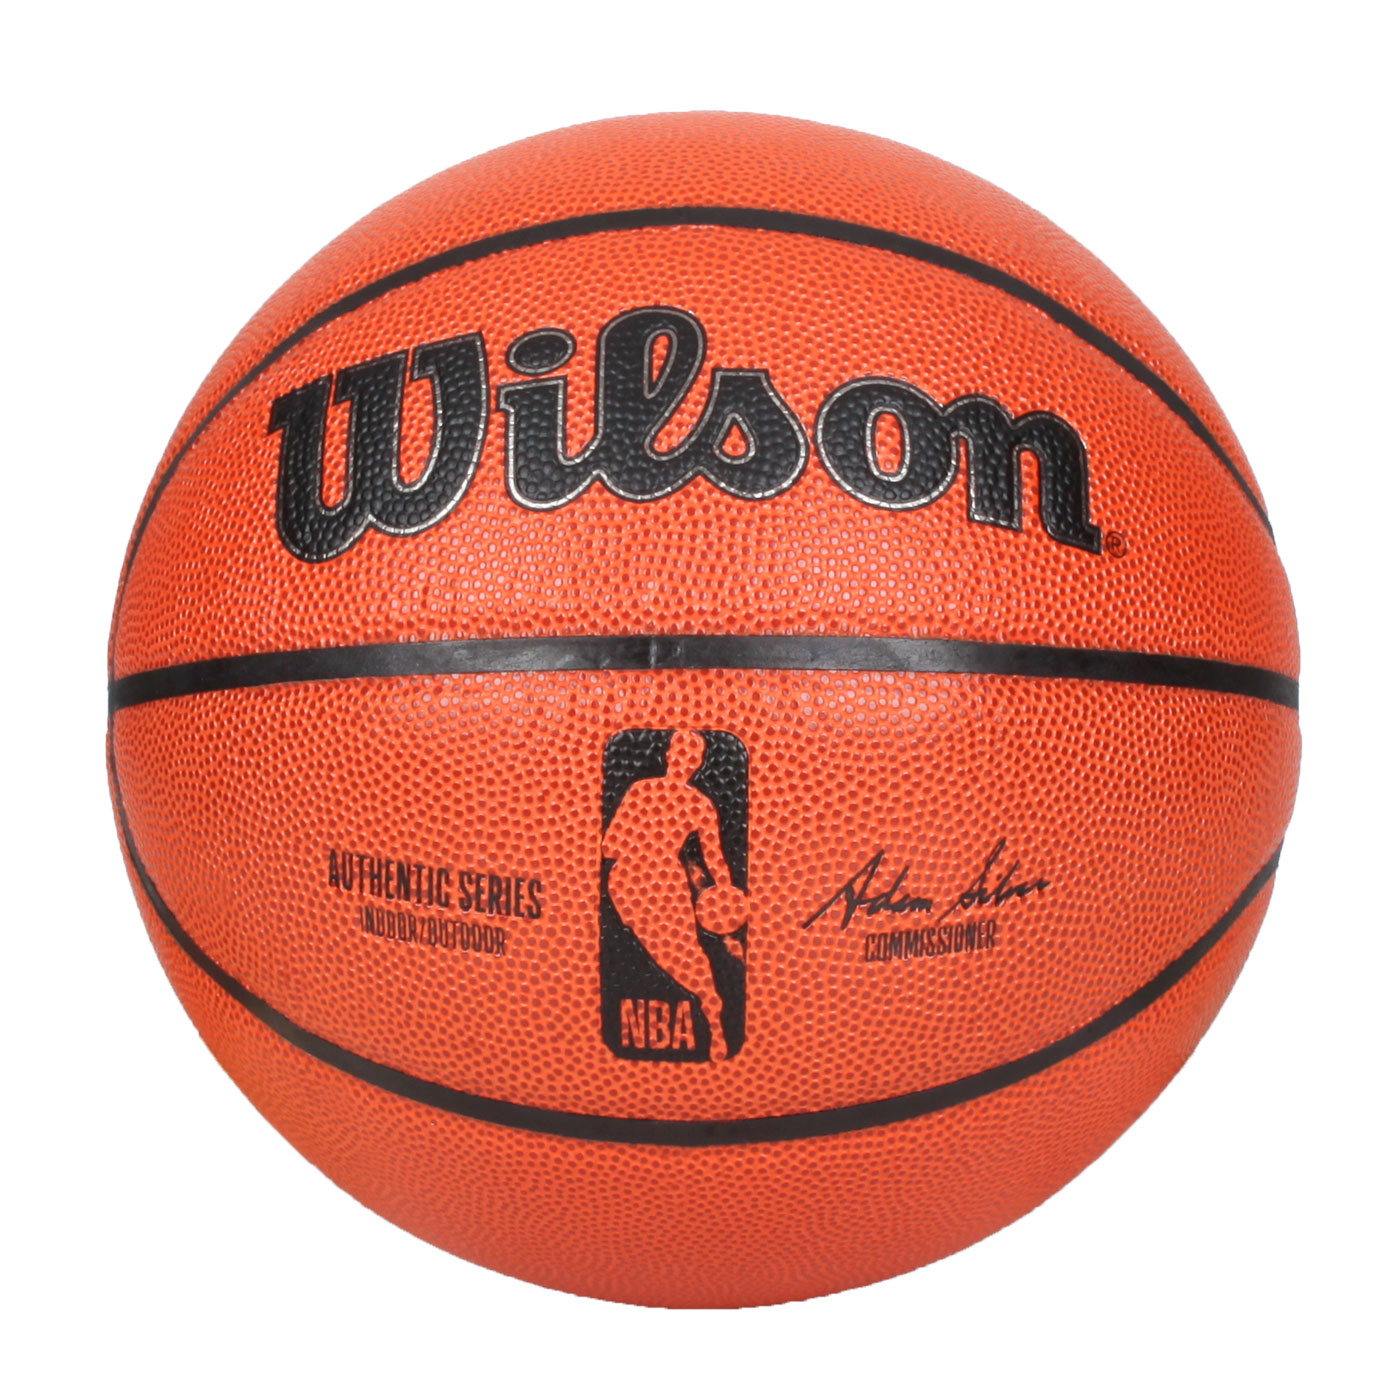 WILSON NBA AUTH系列 合成皮籃球 #7 WTB7200XB07